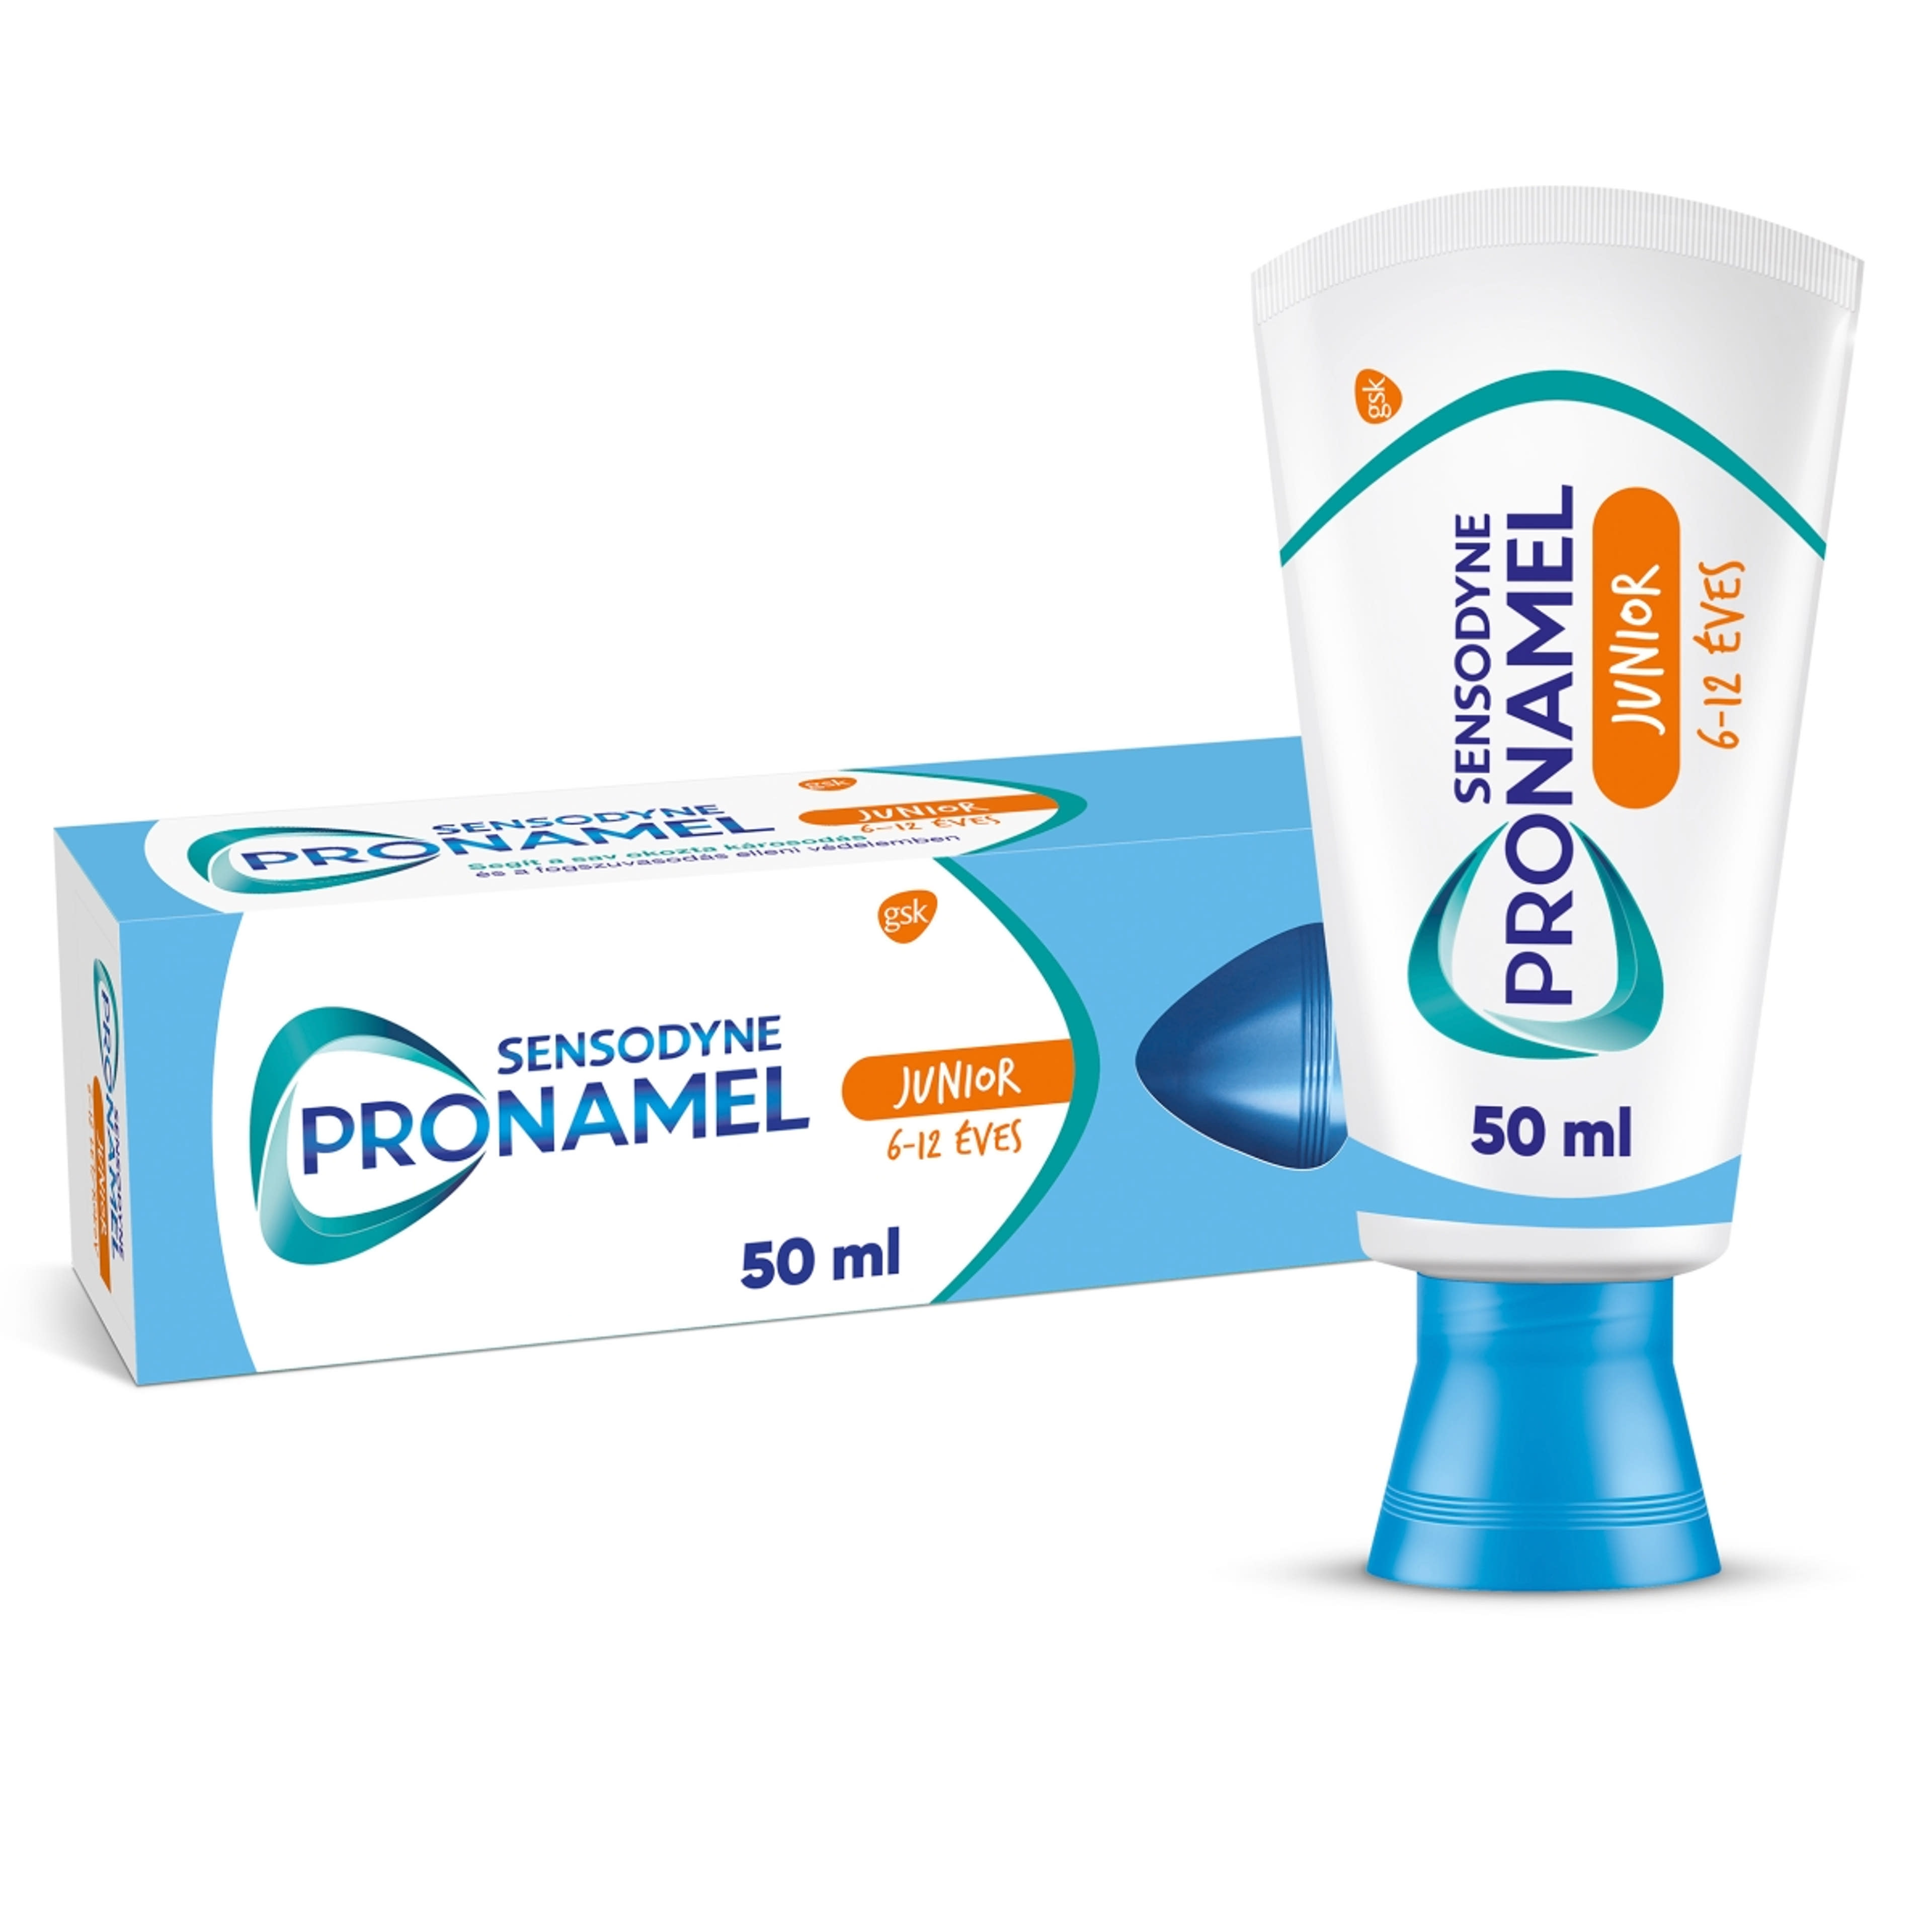 Sensodyne Pronamel Junior fogkrém - 50 ml-2